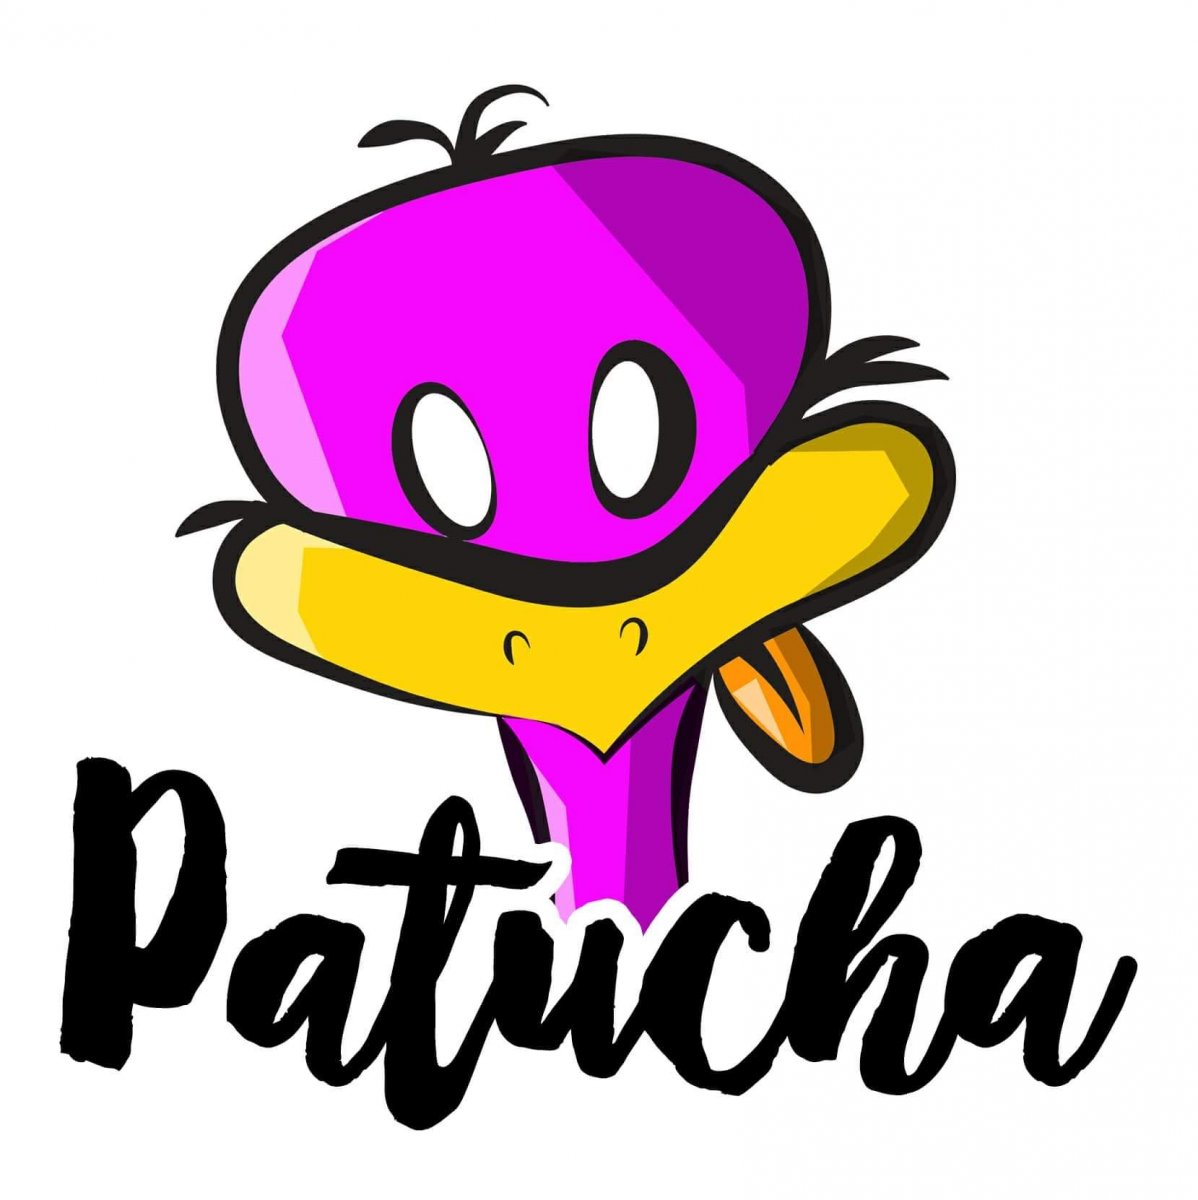 Patucha